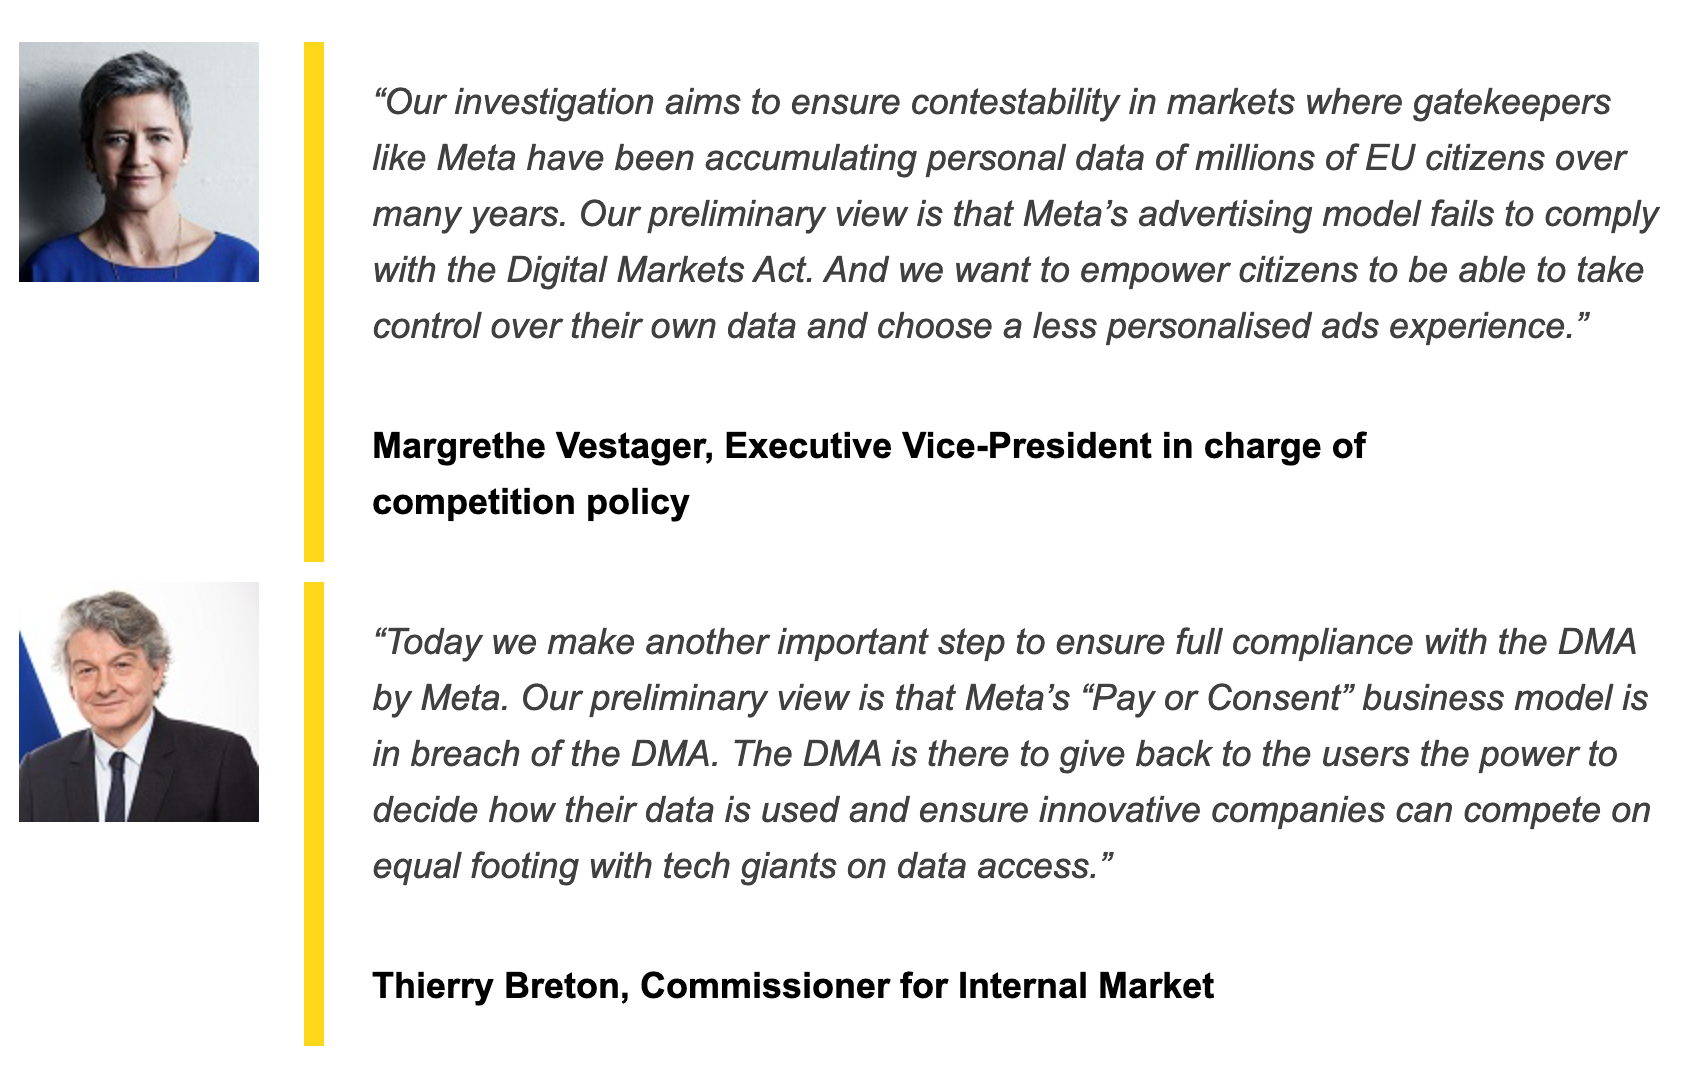 Comments from EU officials regarding Meta investiagation.